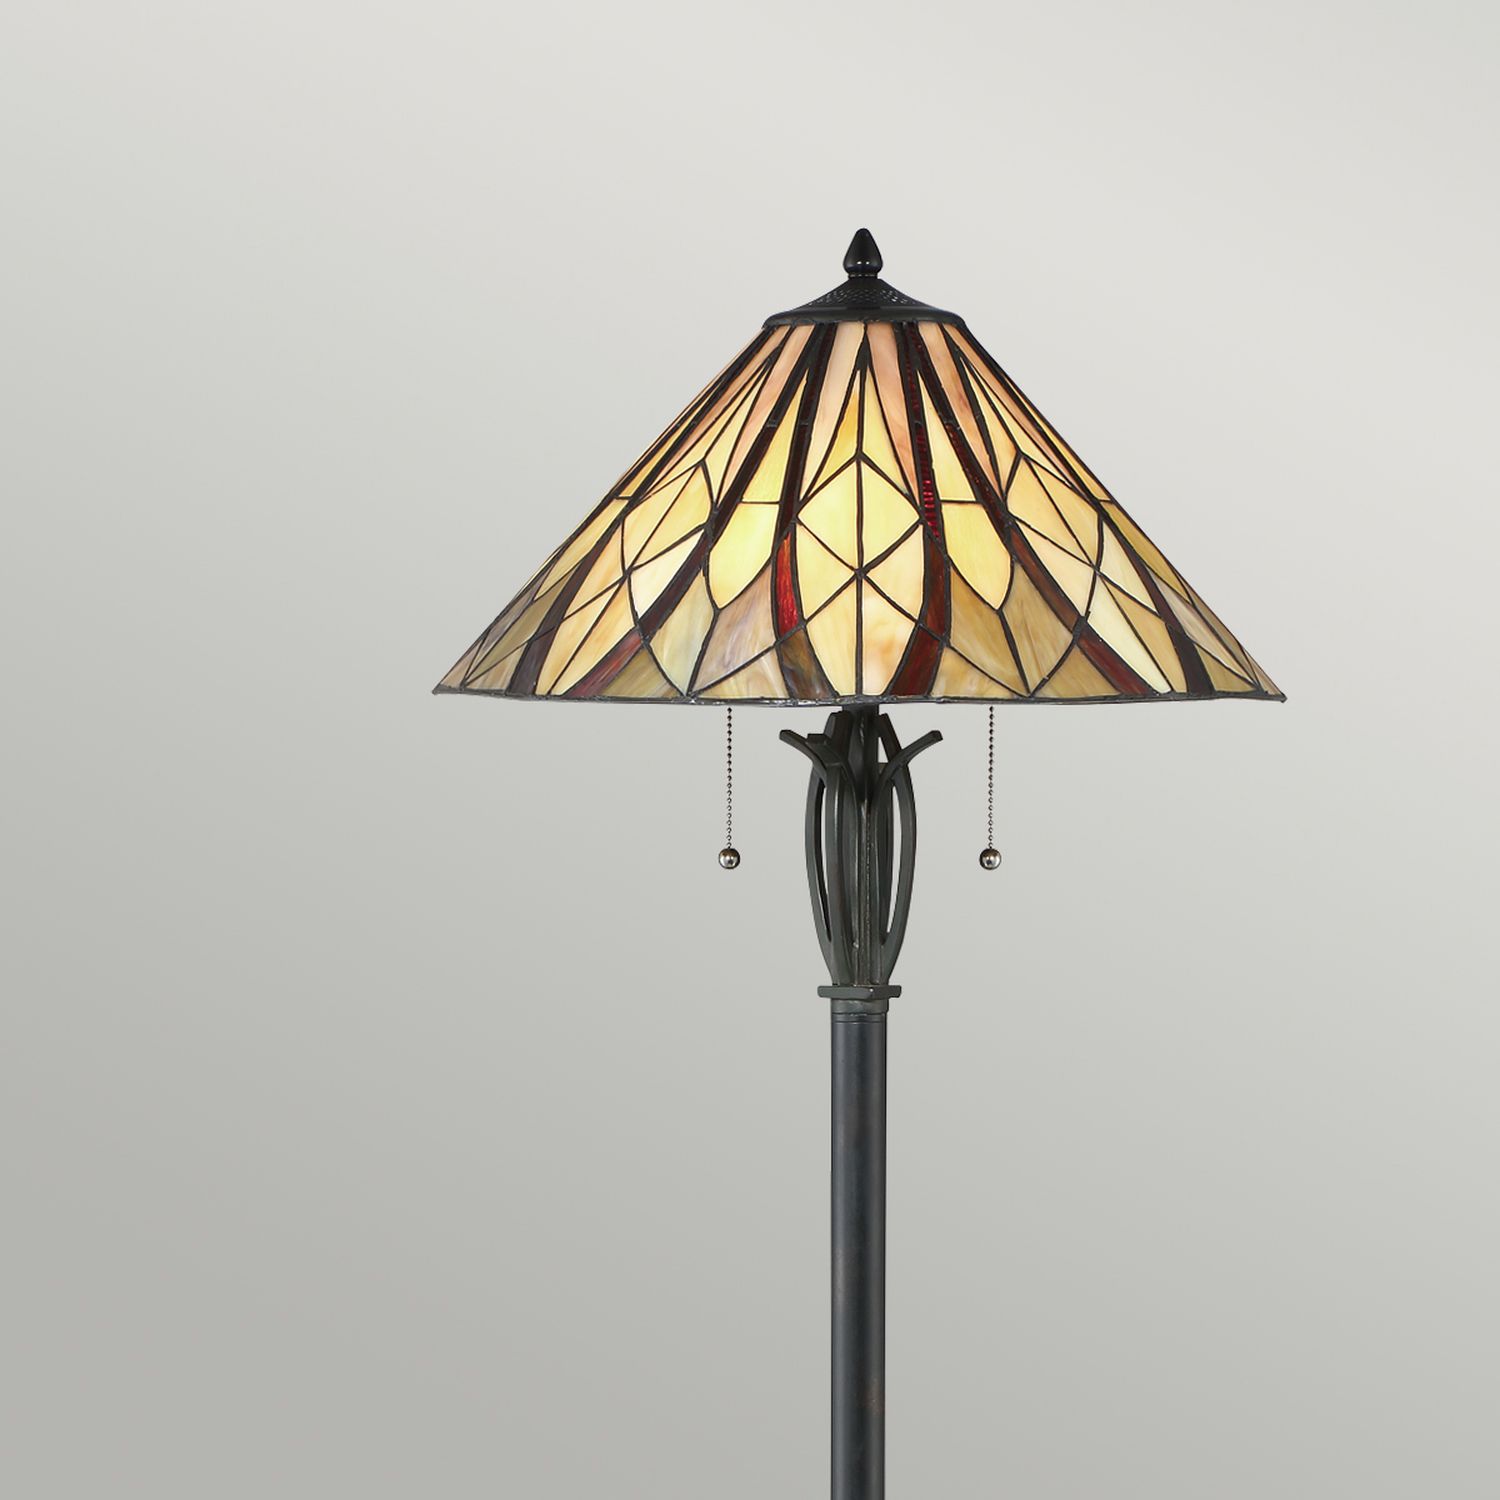 Standlampe Tiffany Stil 149cm Zugpendel E27 Glas Metall